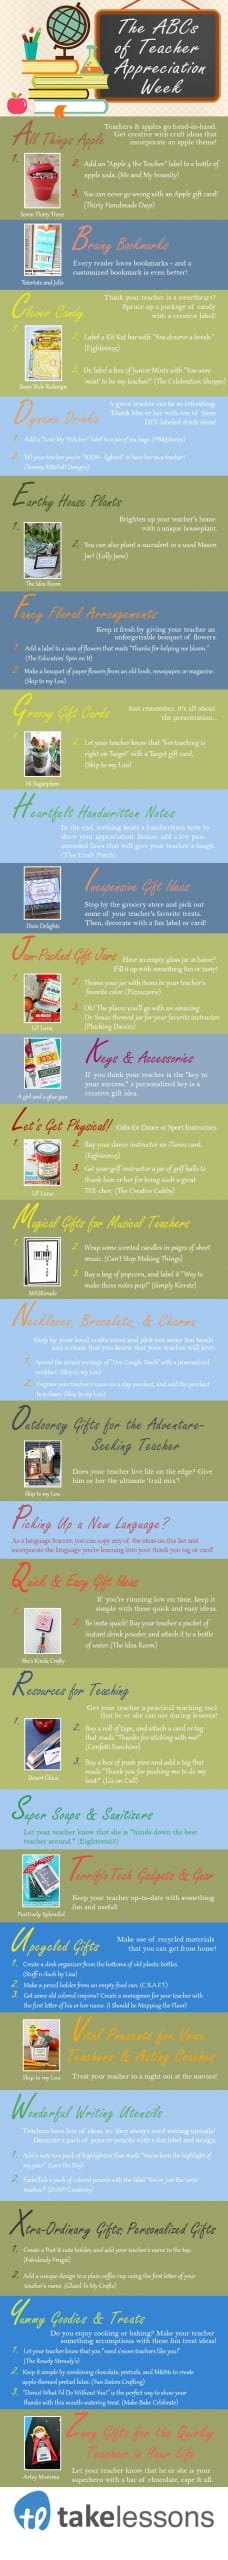 ideas for Teacher Appreciation Week